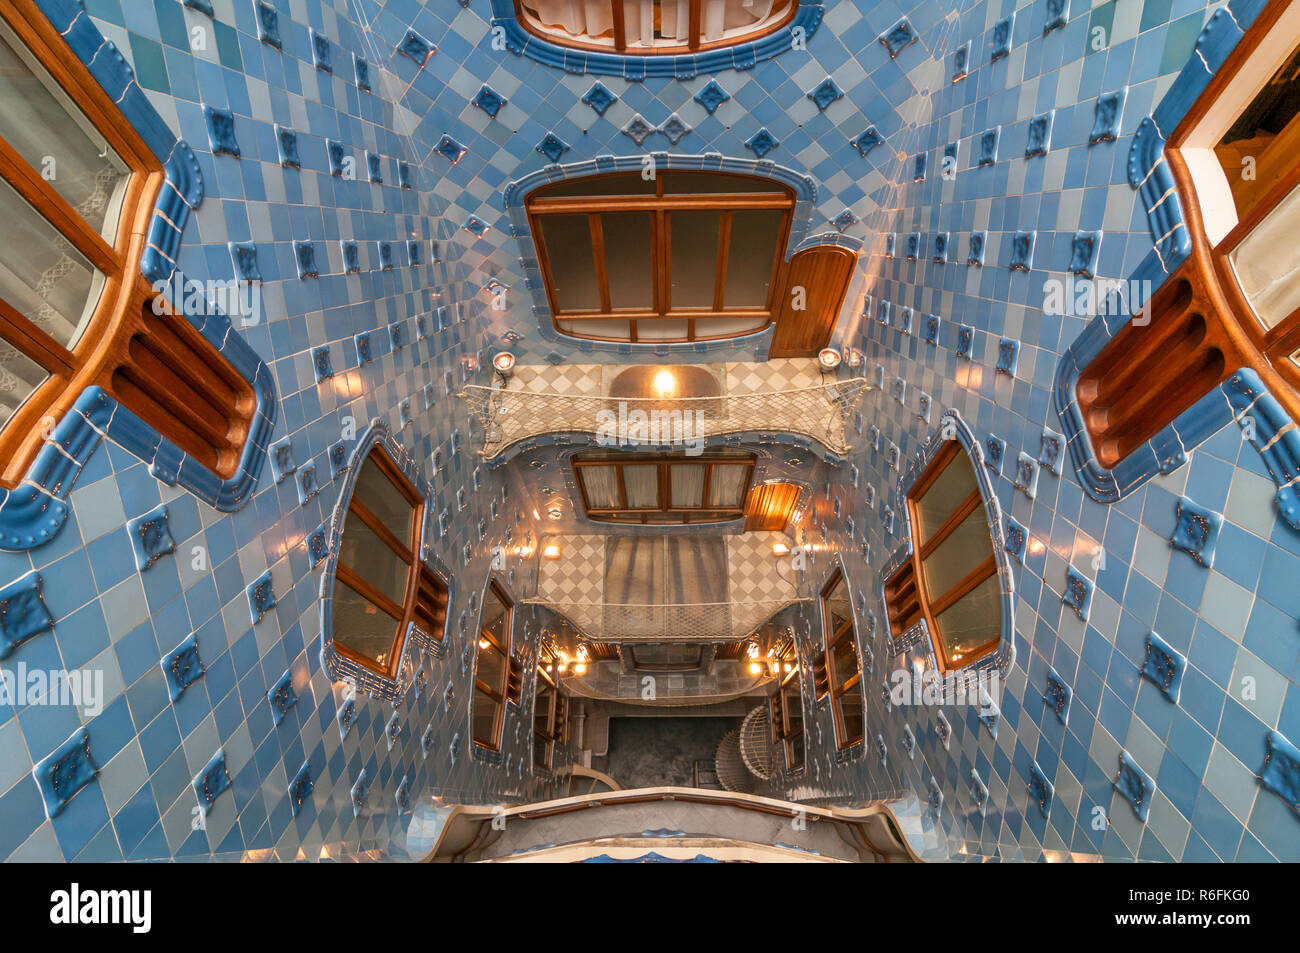 The Interior Of The Famous Casa Battlo Building Designed By Antonio Gaudi In Barcelona, Spain Stock Photo